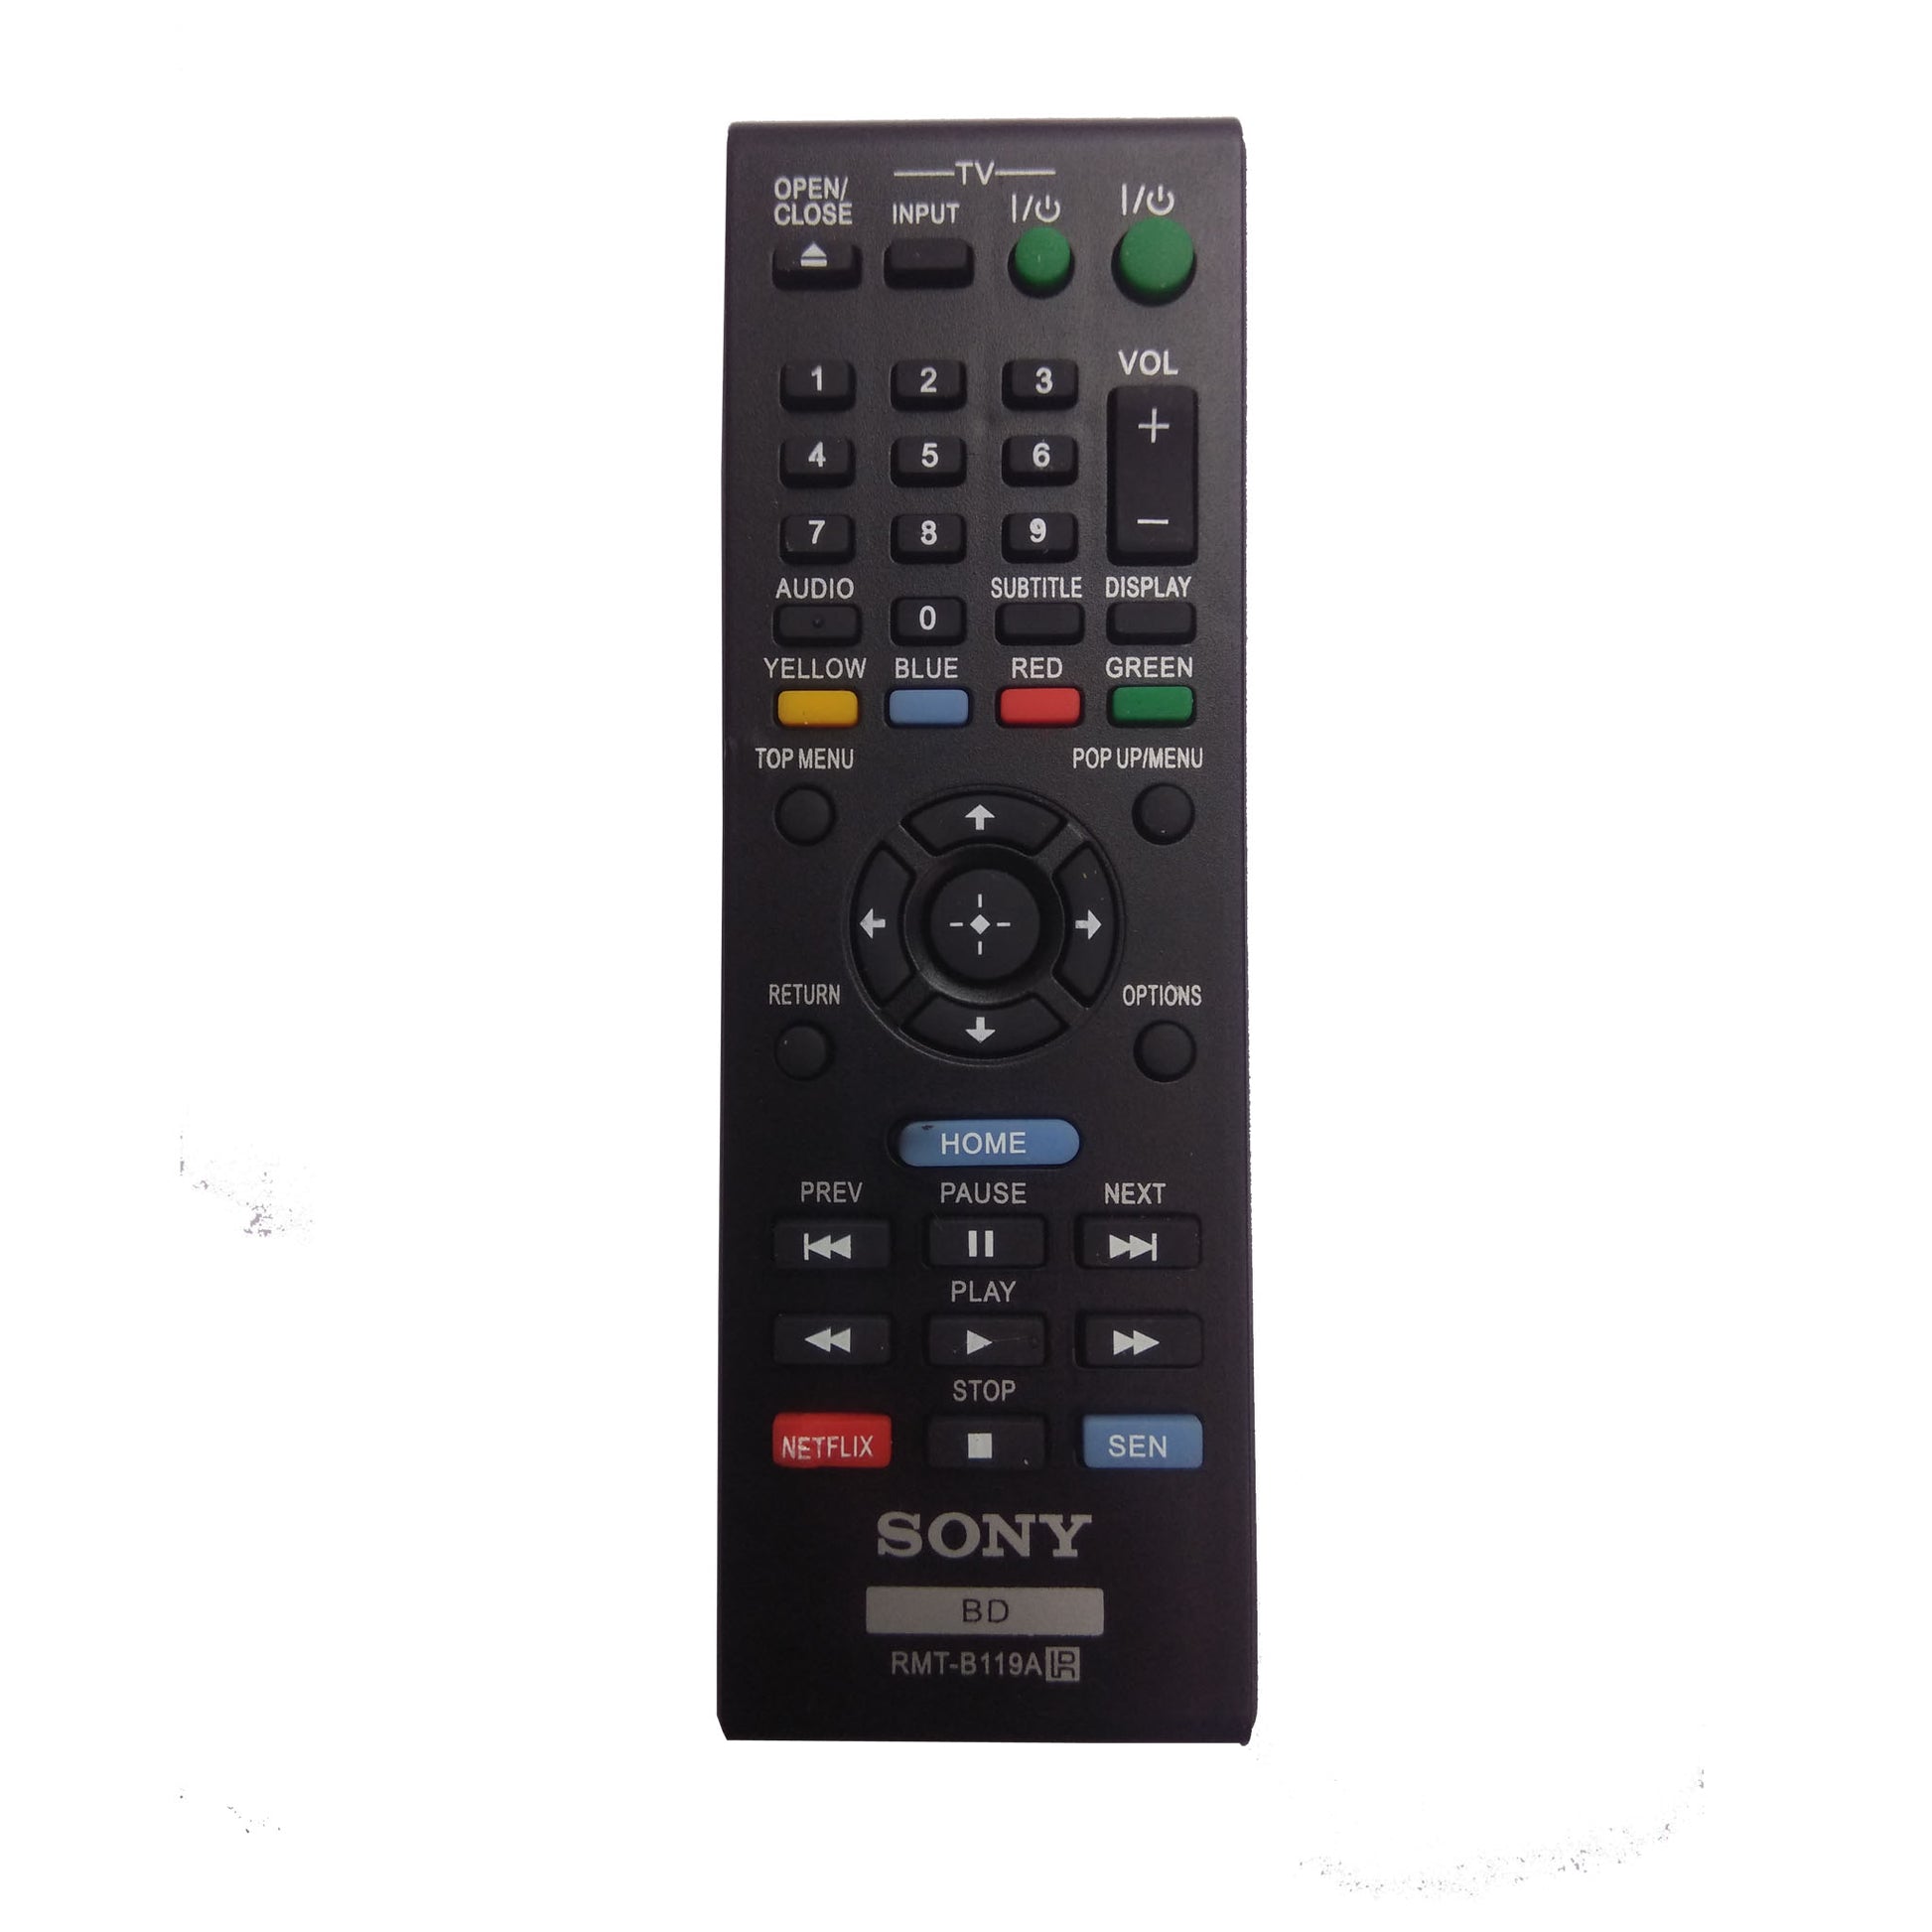 Sony Blue Ray Remote Control * Compatible*High Sensitivity - Faritha